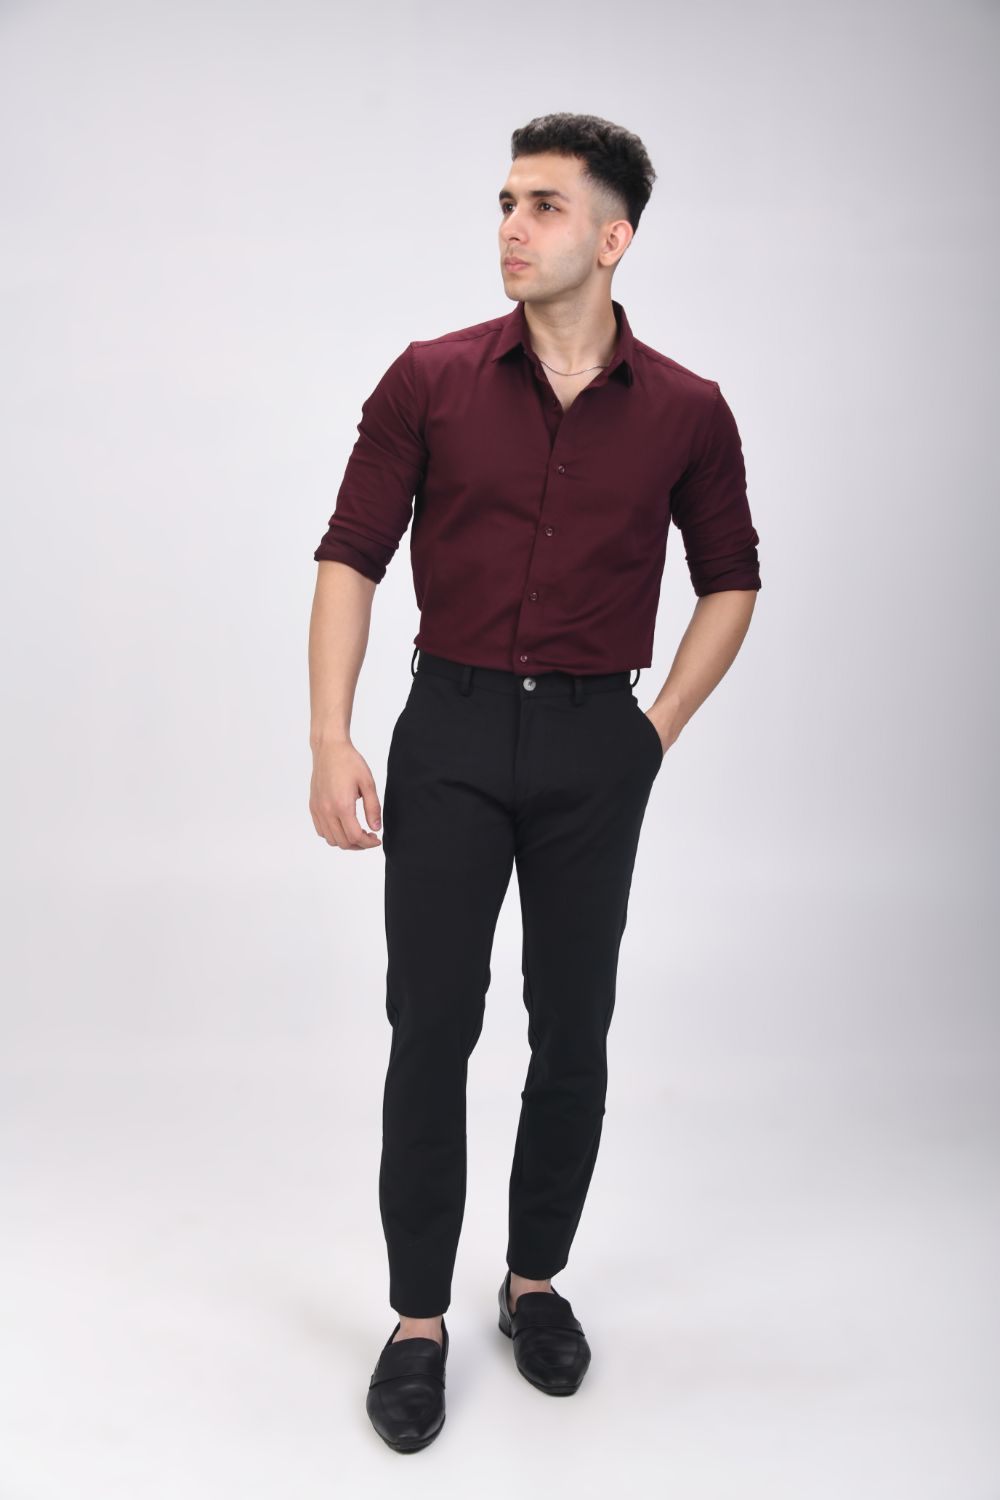 Guy in maroon shirt black pants Royalty Free Vector Image